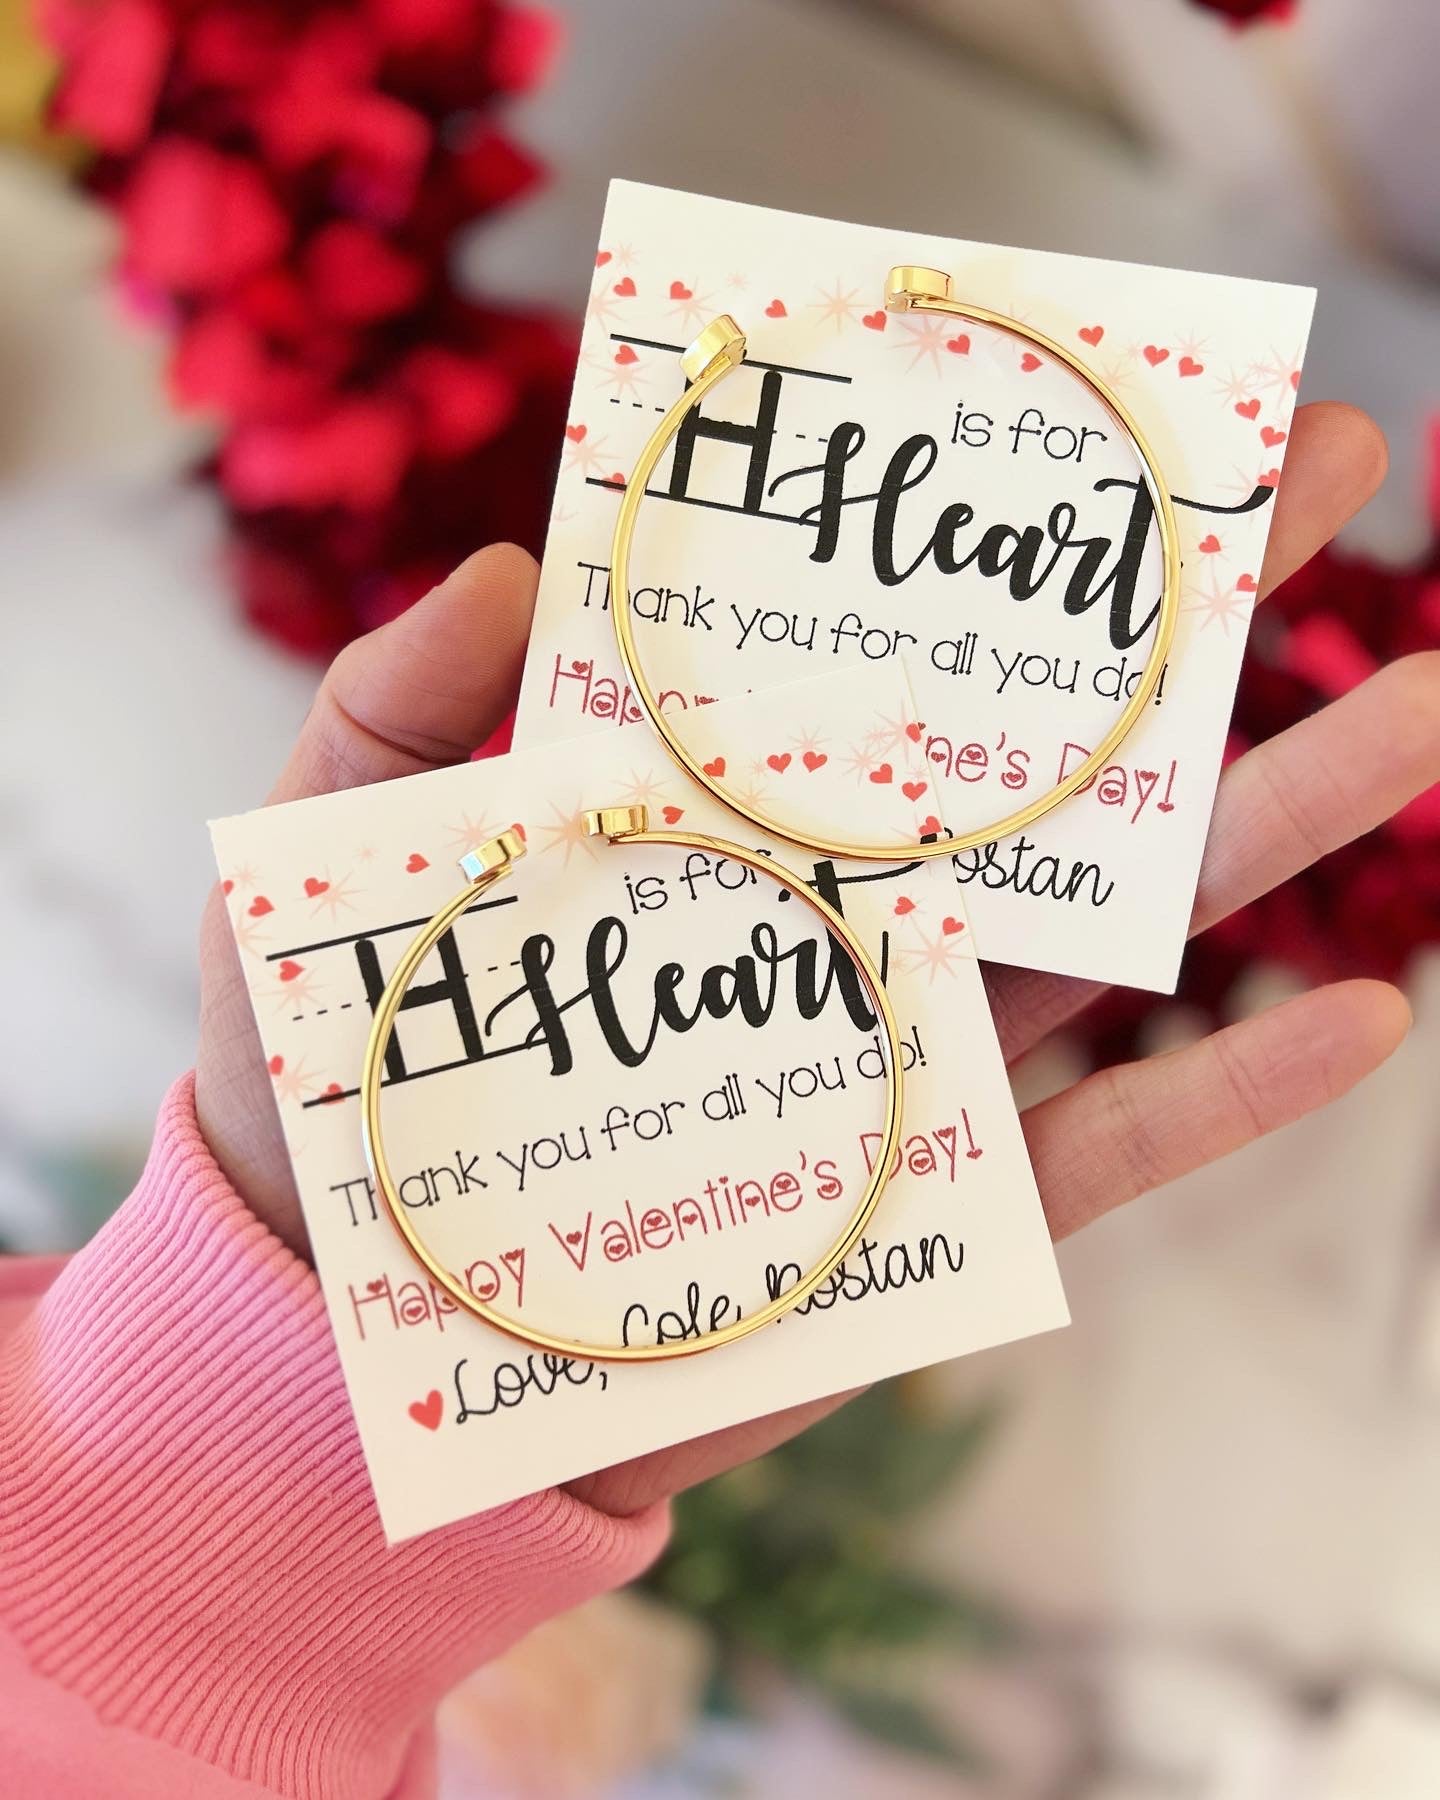 H is for Heart! Teacher Valentine's Day gift!